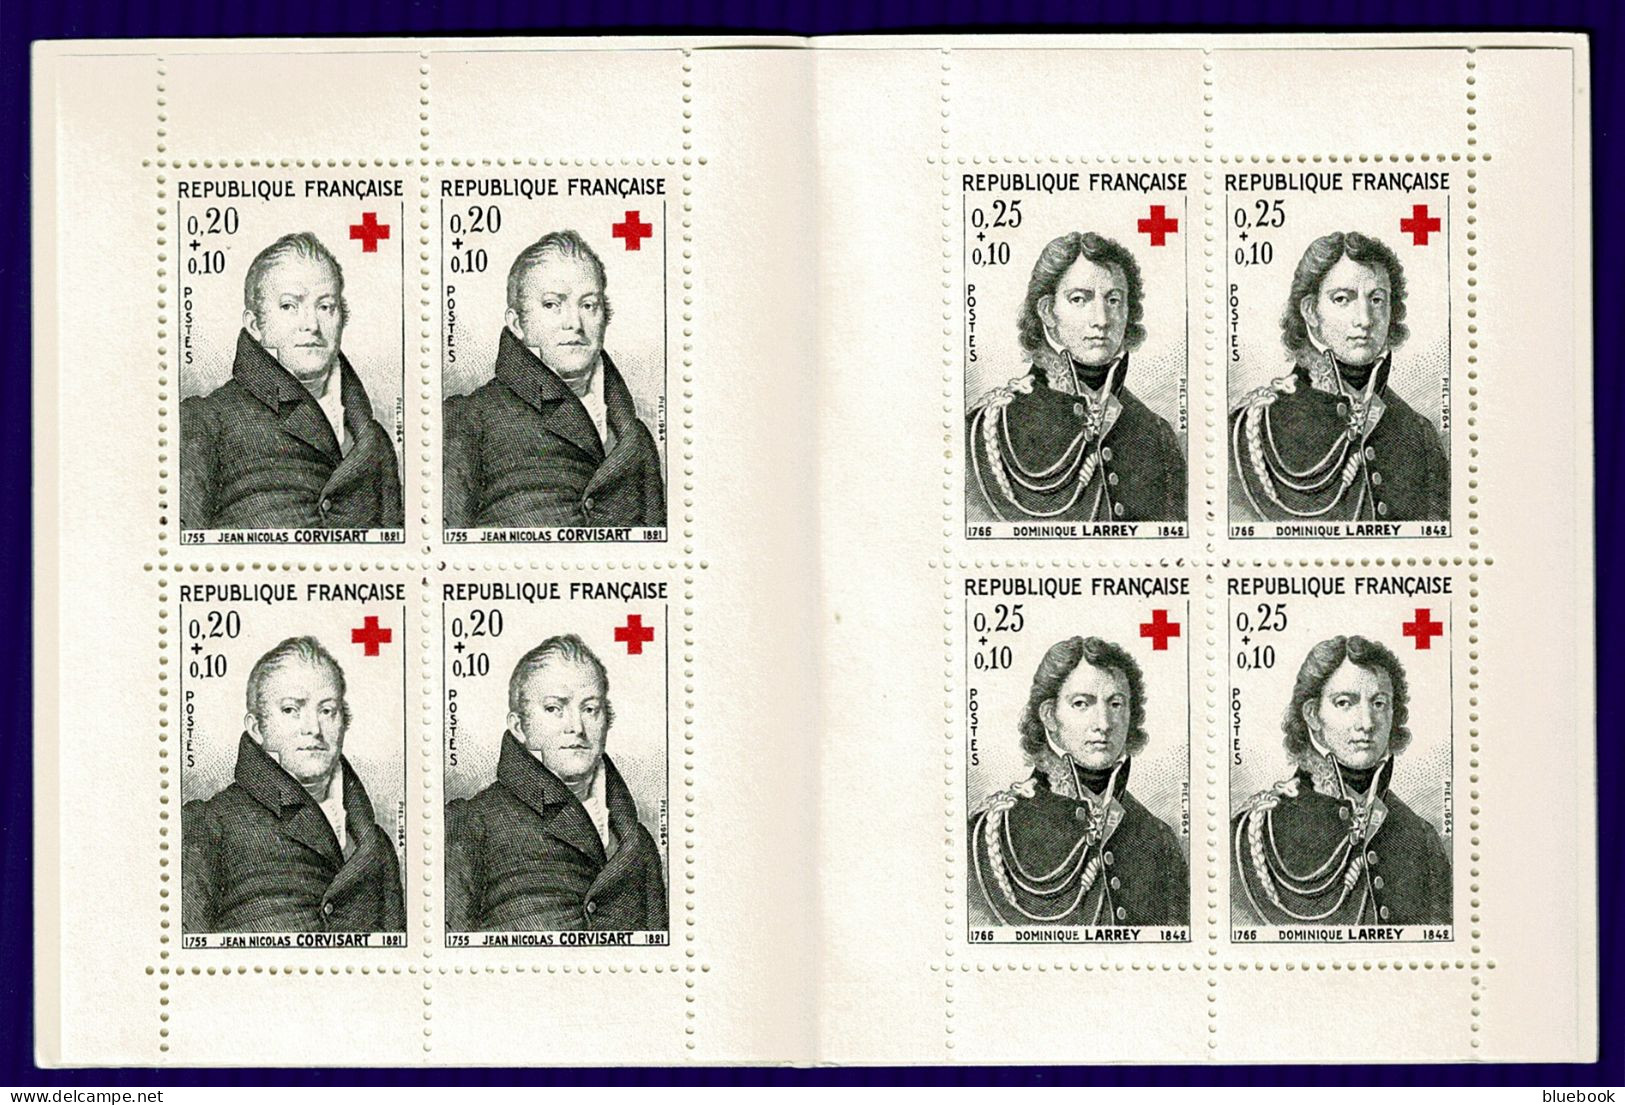 Ref 1645 - France 1964 - Red Cross Booklet SG 1665/1666 - Red Cross